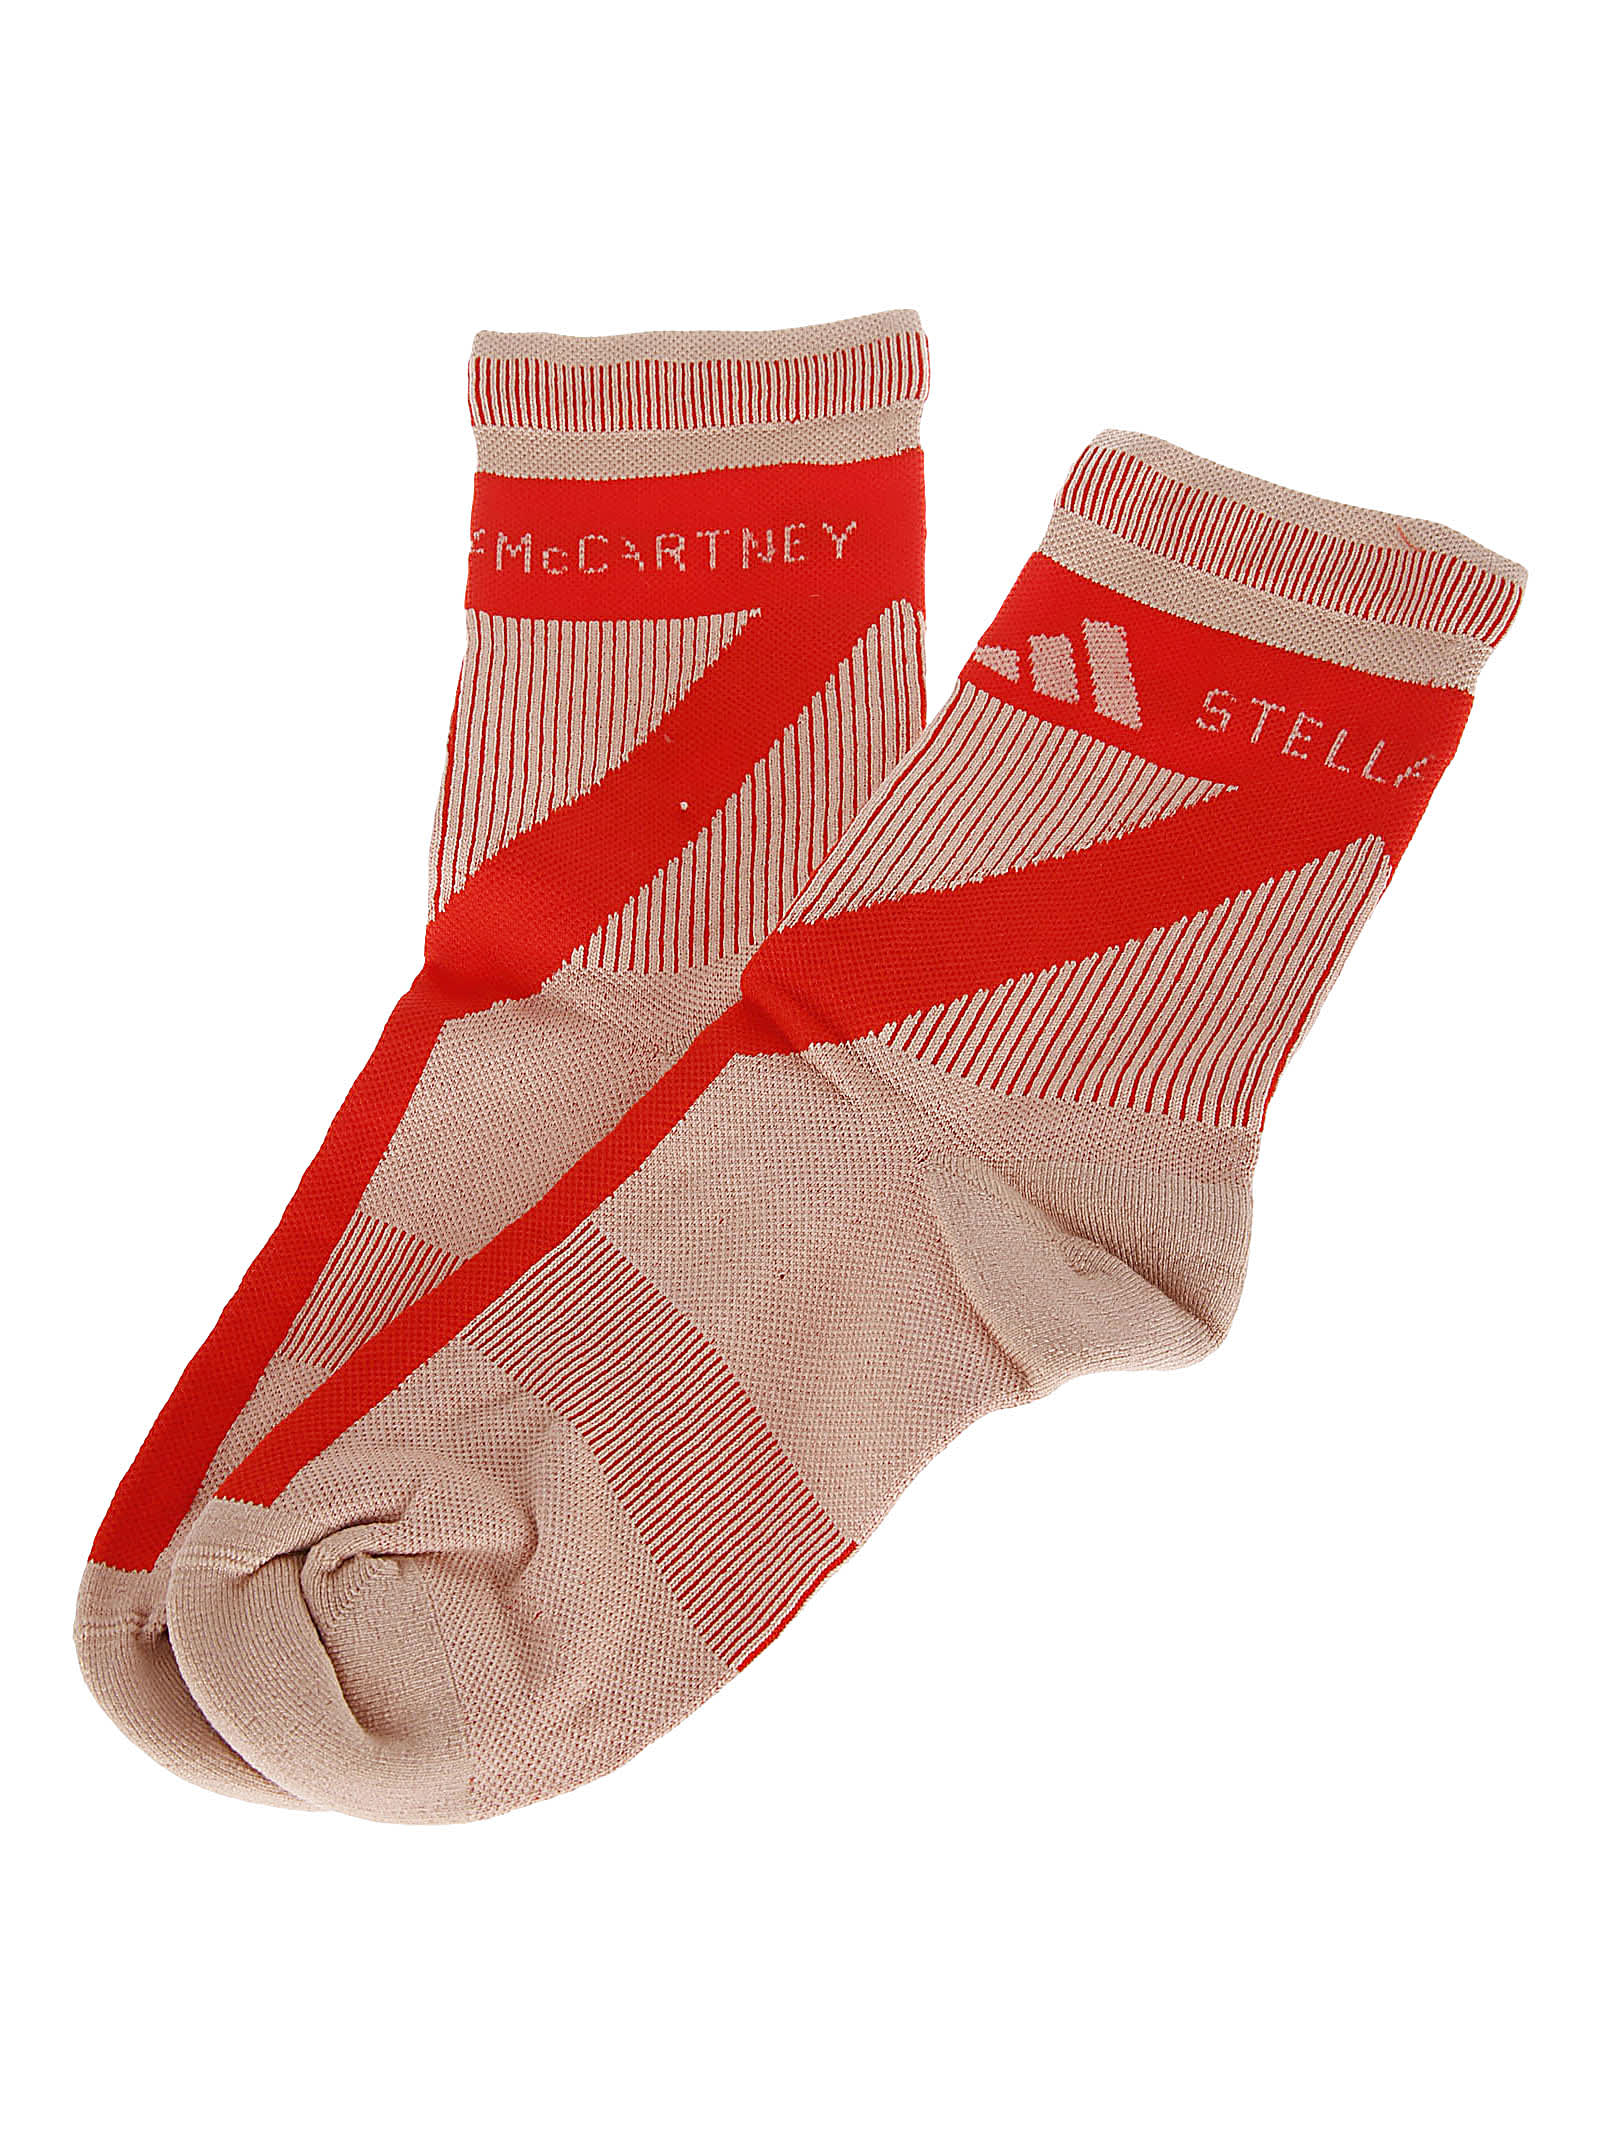 Adidas By Stella Mccartney #n# Crew Socks In Salmond/active Red